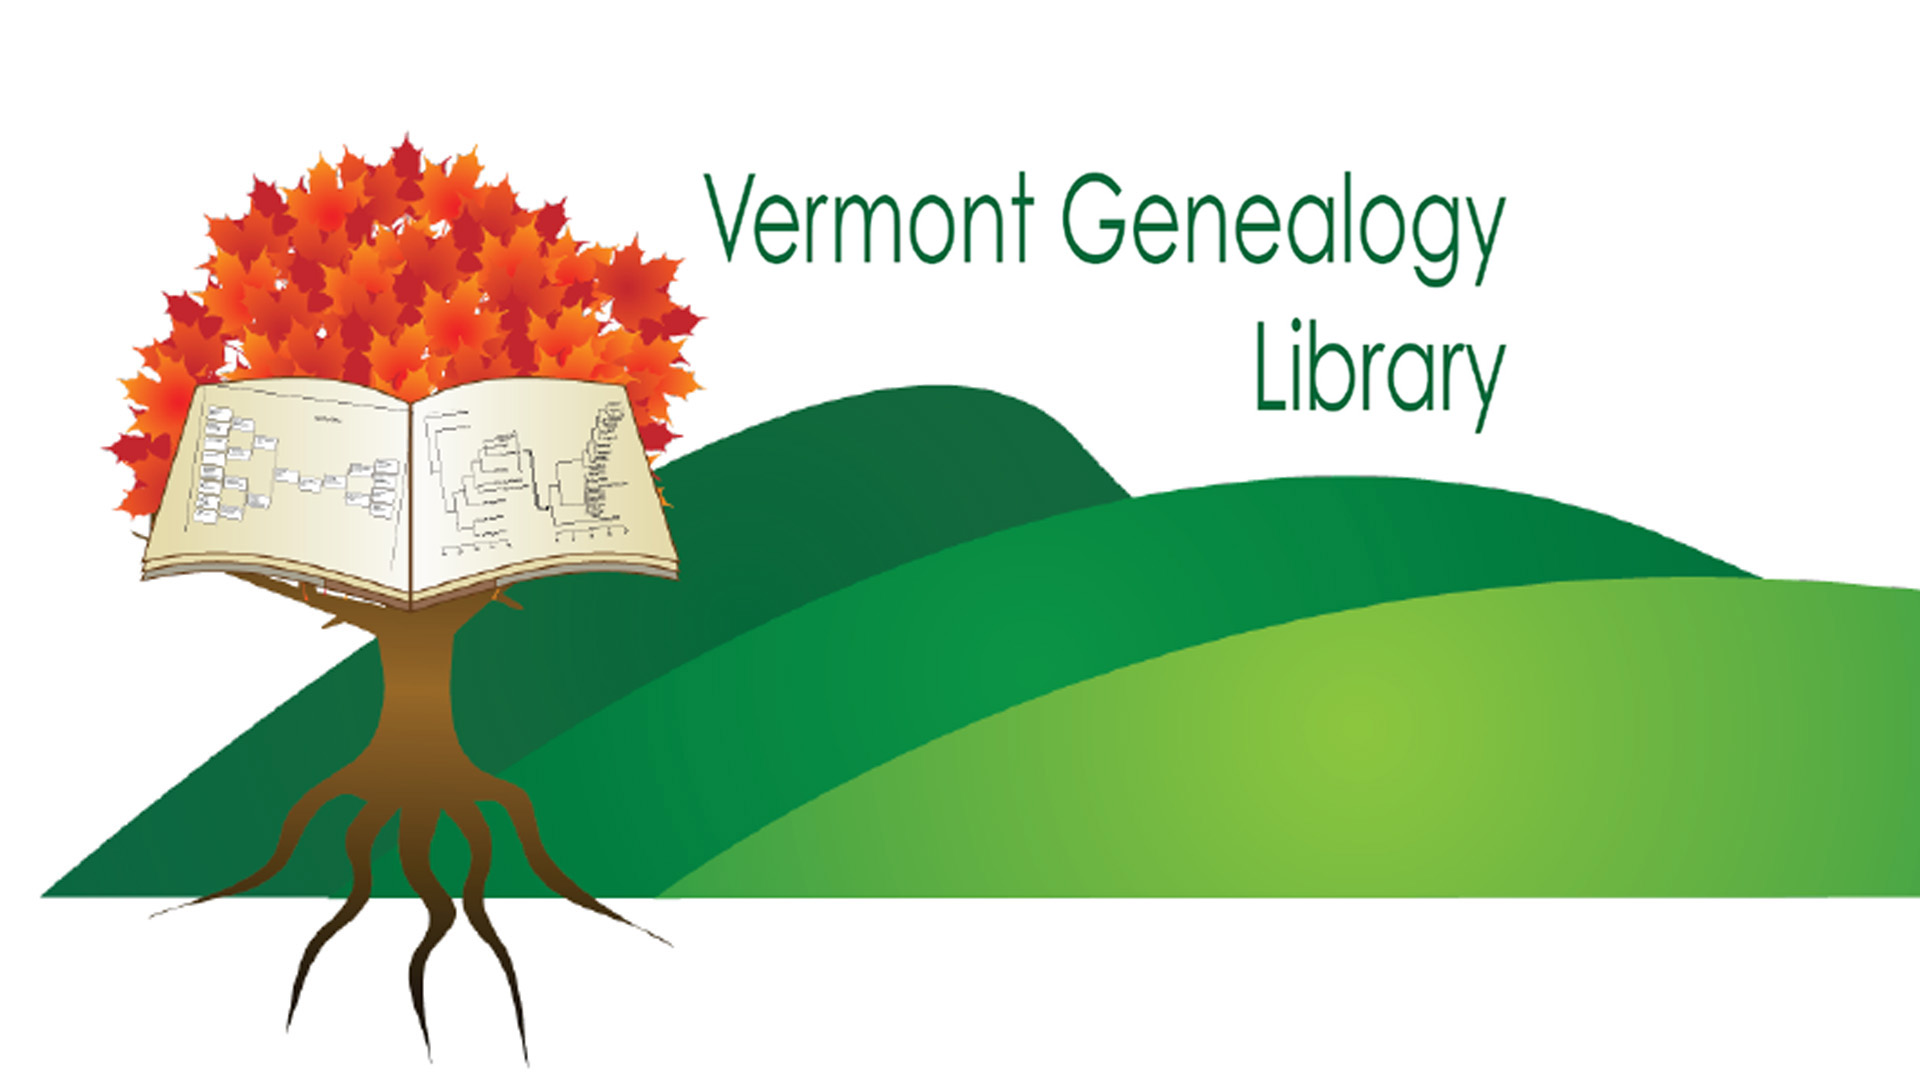 Vermont Genealogy Library